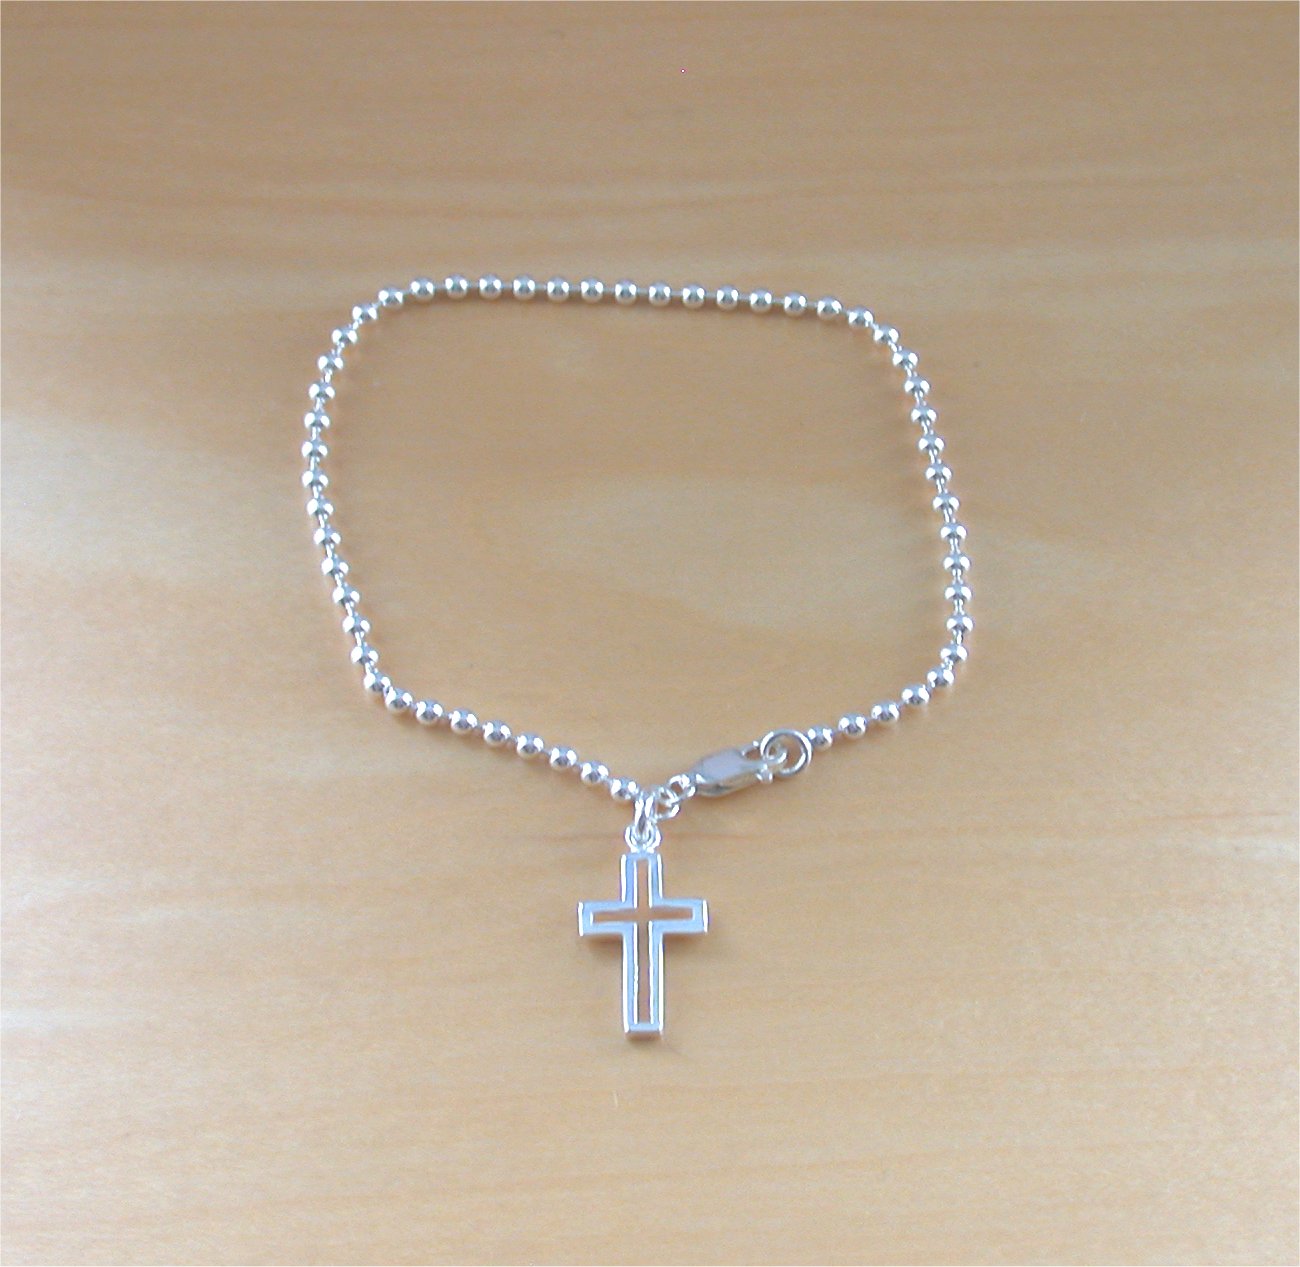 silver bracelet with cross